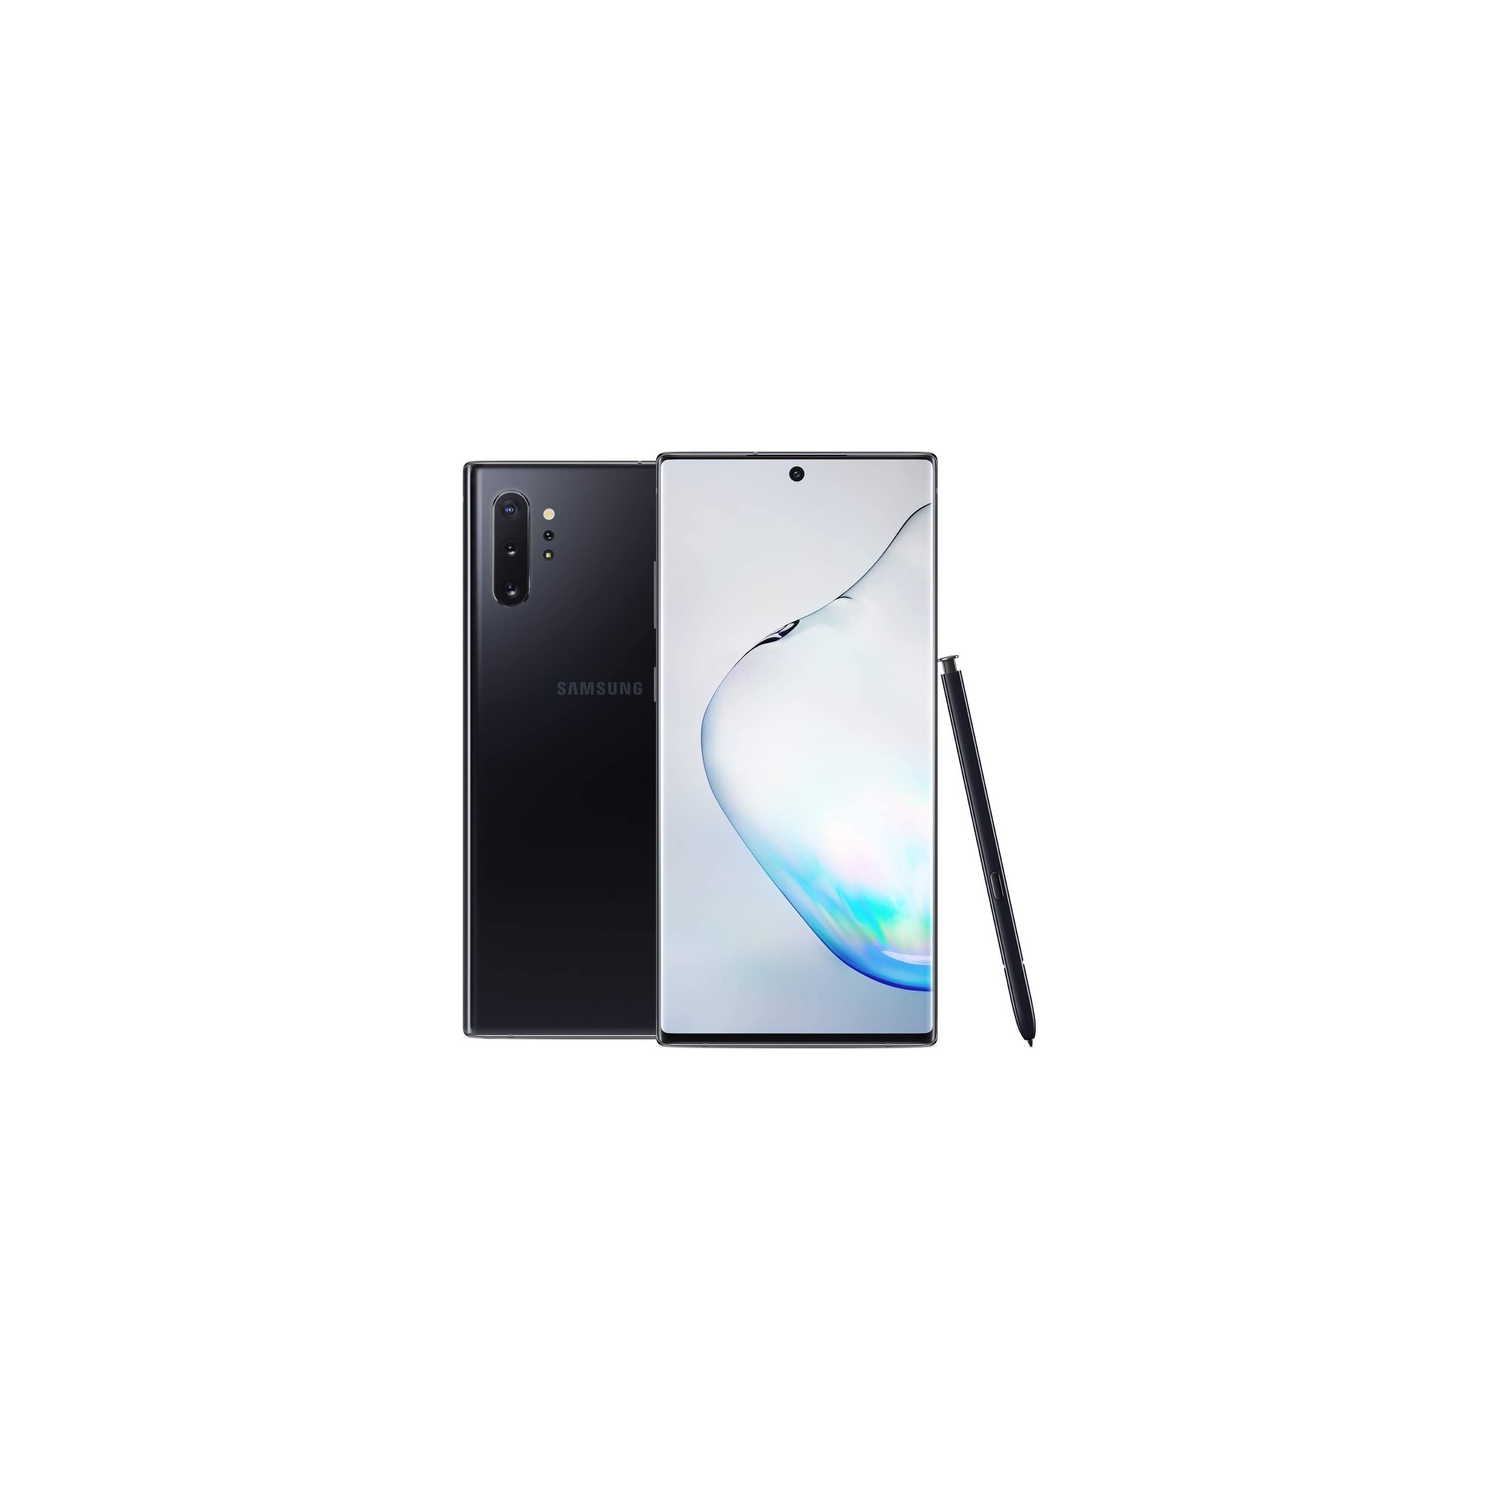 Samsung- Galaxy Note 10+ 256GB - N975U - Factory Unlocked - Smartphone- International Model - Open Box - 10/10 Condition - Black